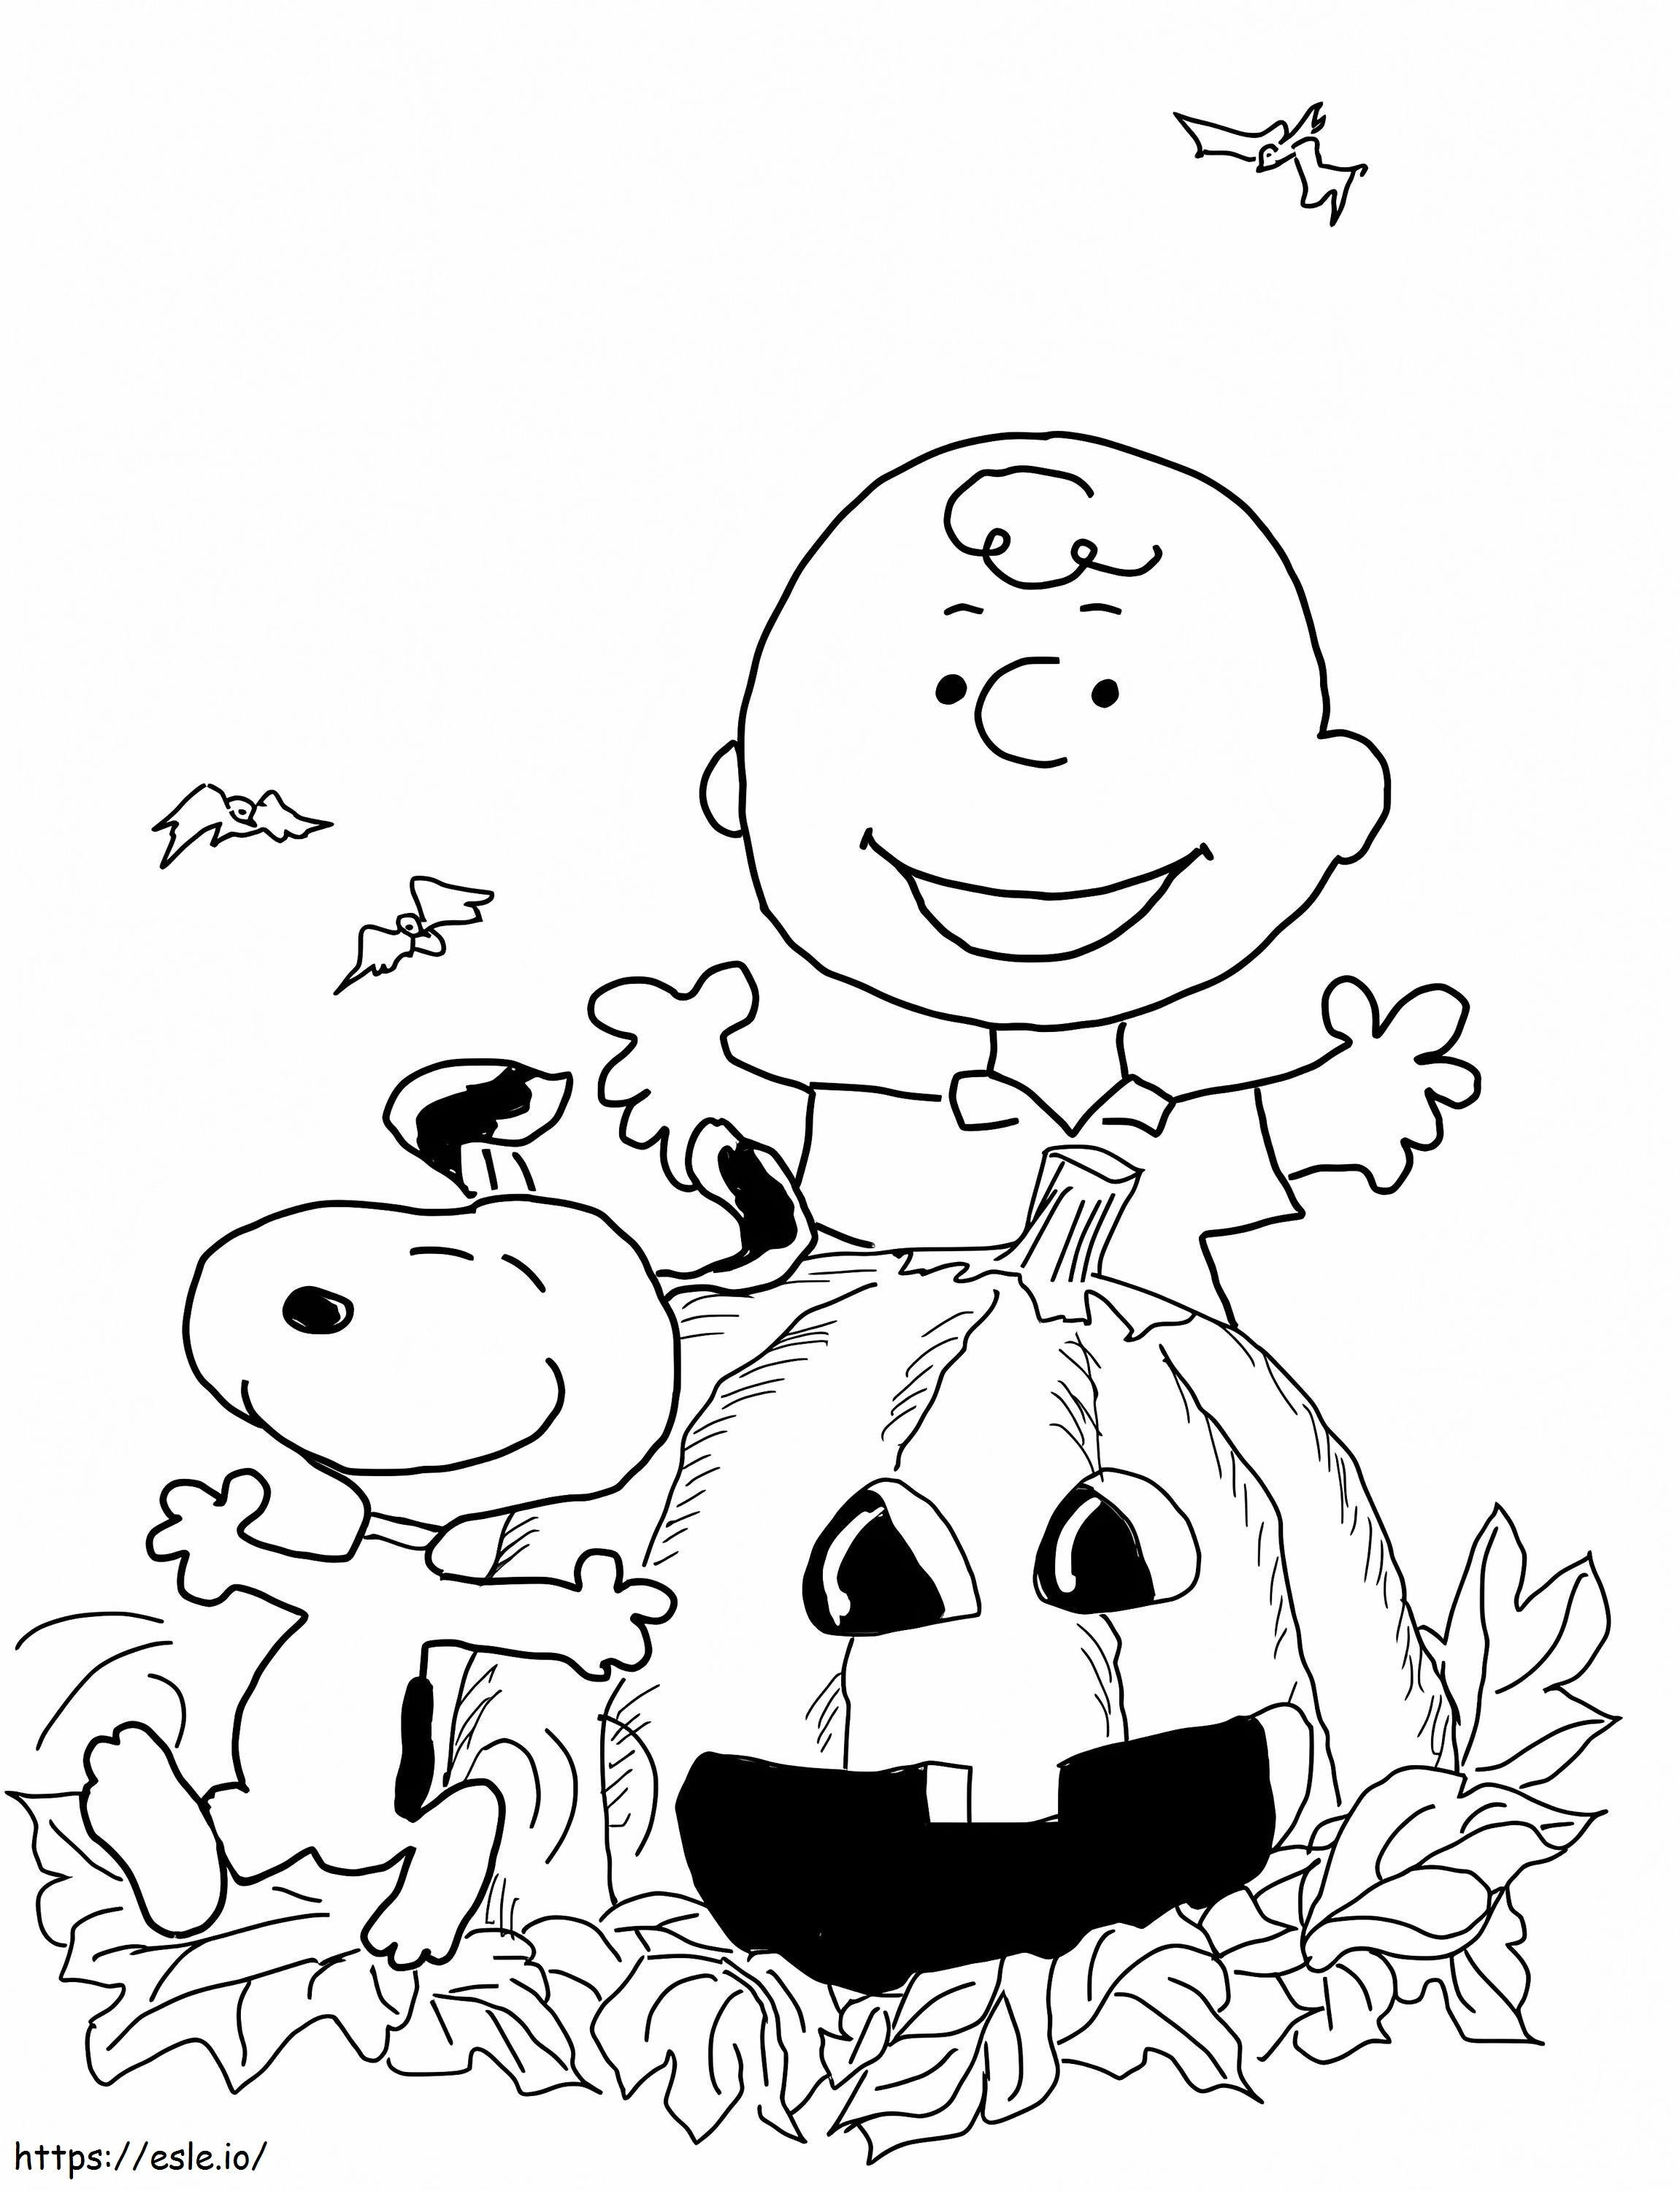 Charlie Brown Halloween kifestő